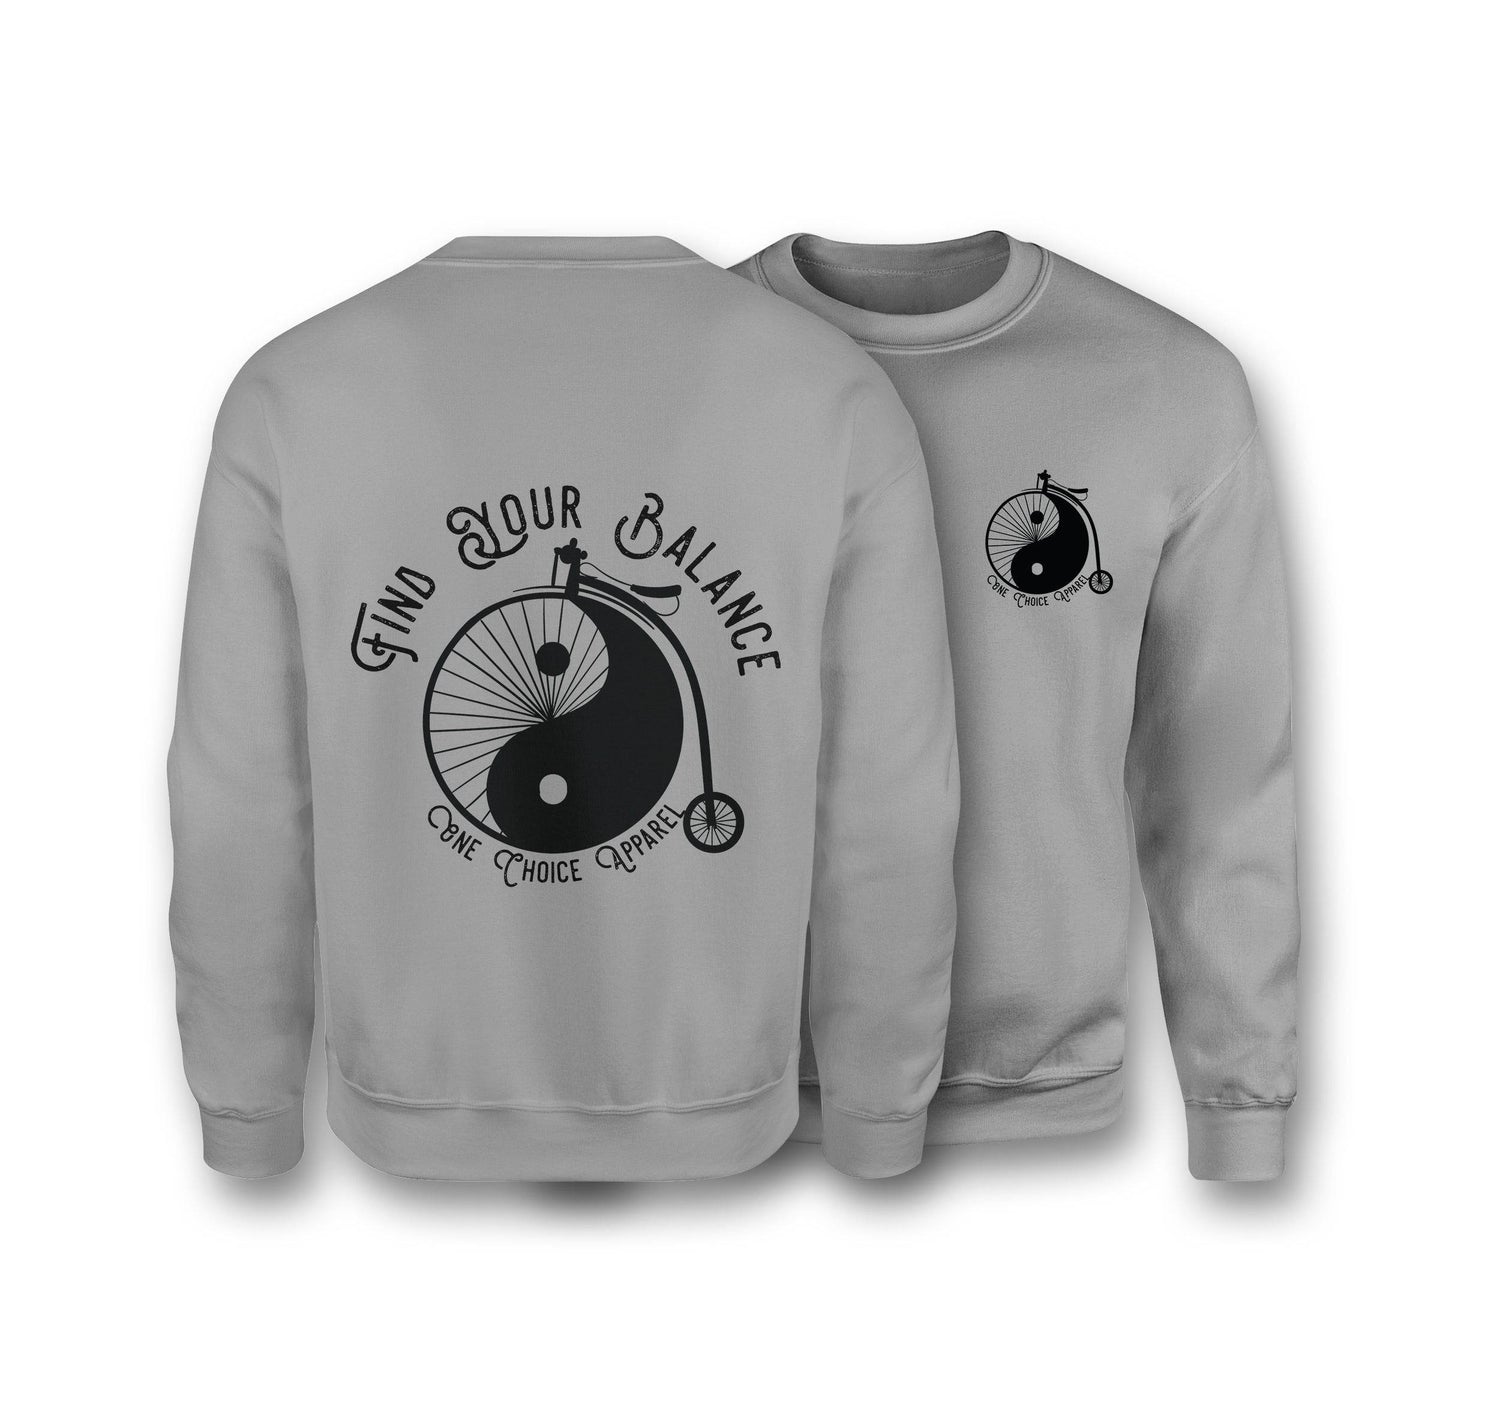 Find Your Balance Sweatshirt - Organic Cotton Sweatshirt - One Choice Apparel